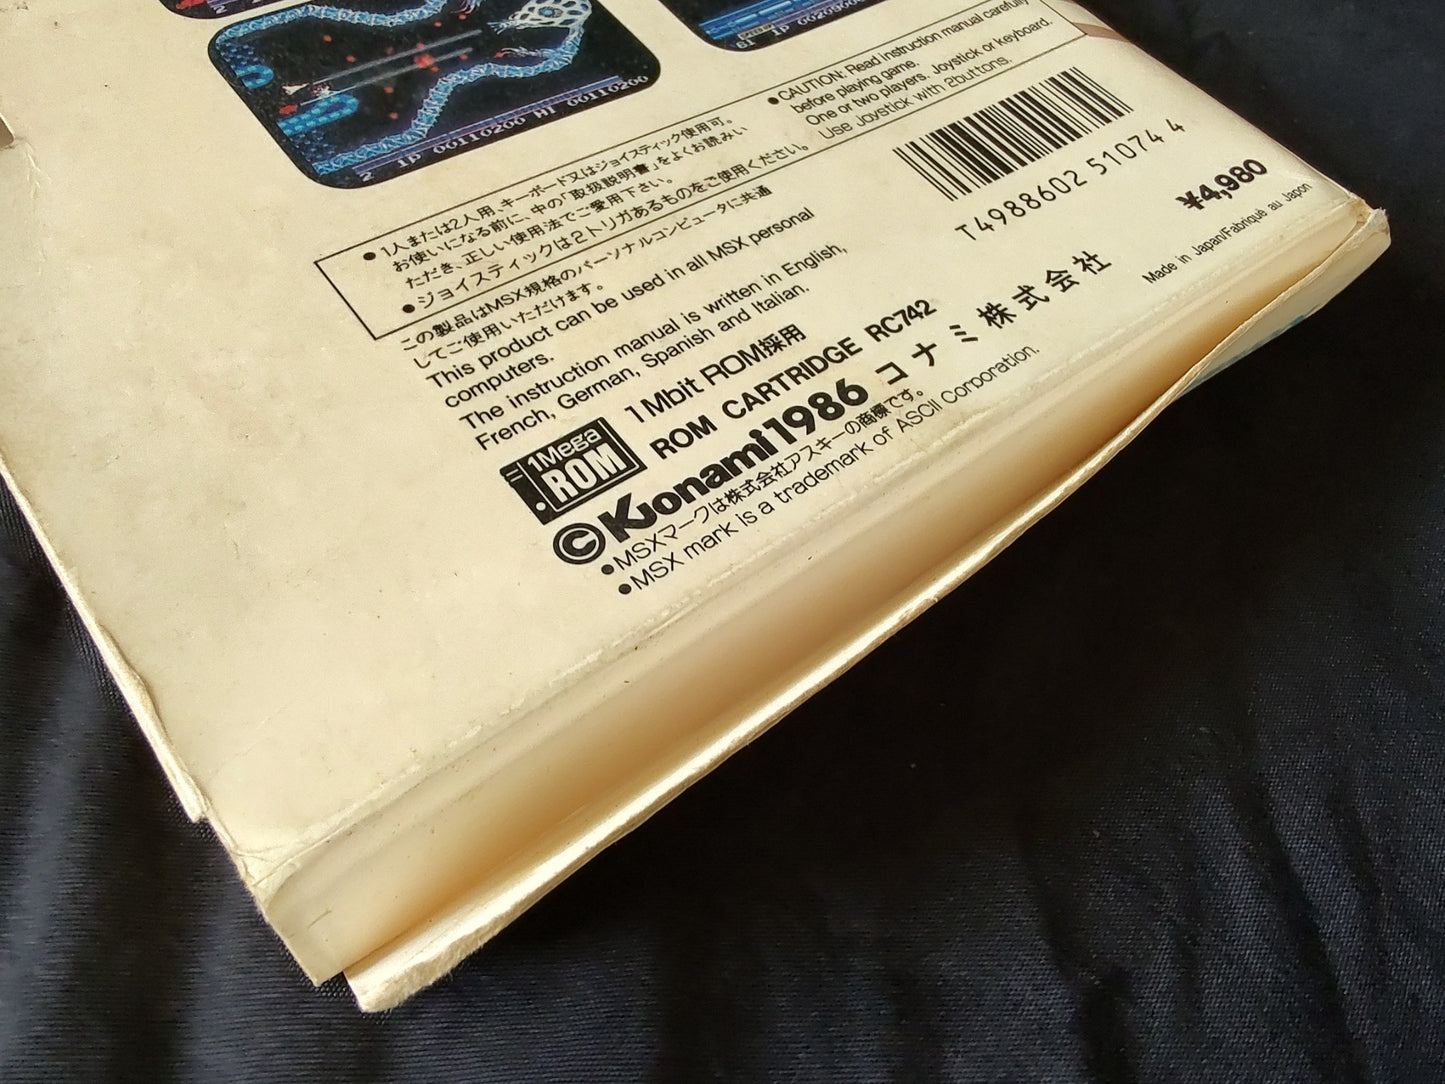 GRADIUS NEMESIS  MSX/MSX2 Game Cartridge, Manual and Boxed set tested-g0415-